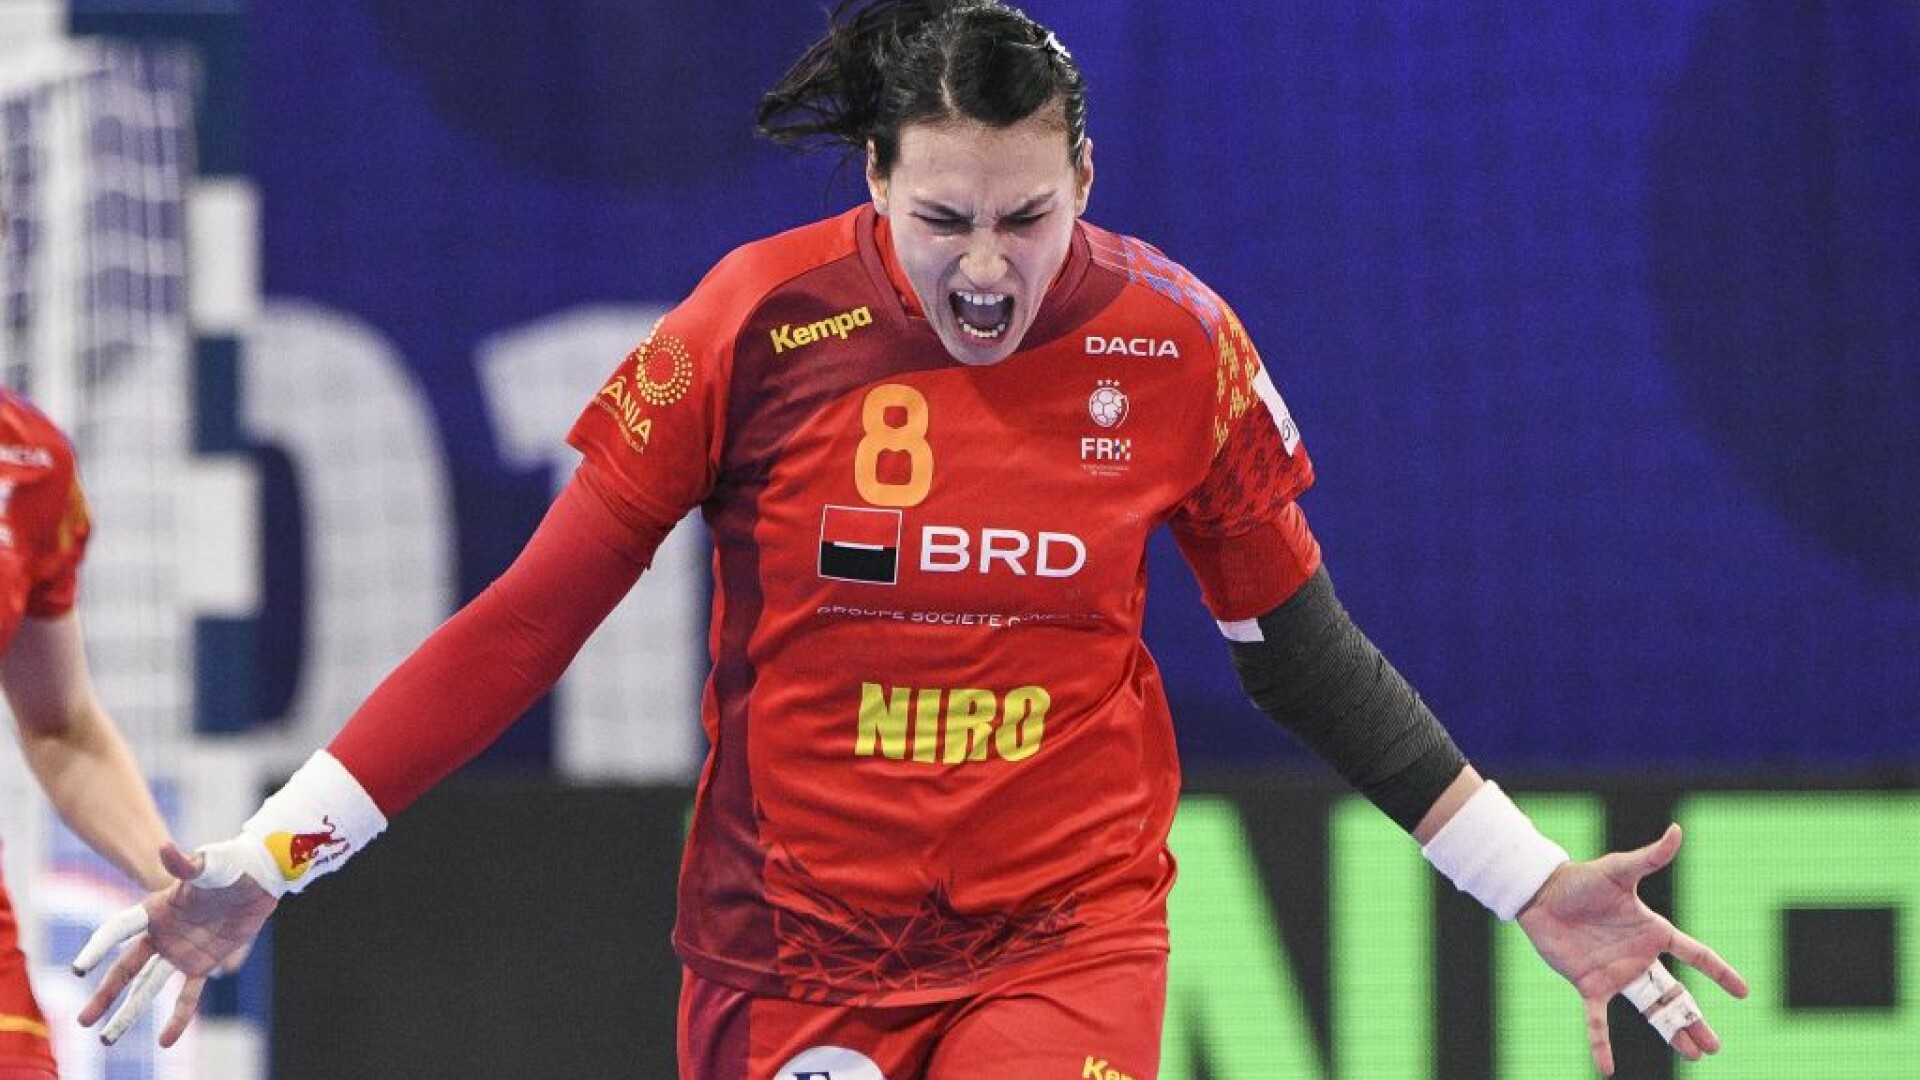 Campionatul European de Handbal Feminin - Cristina Neagu